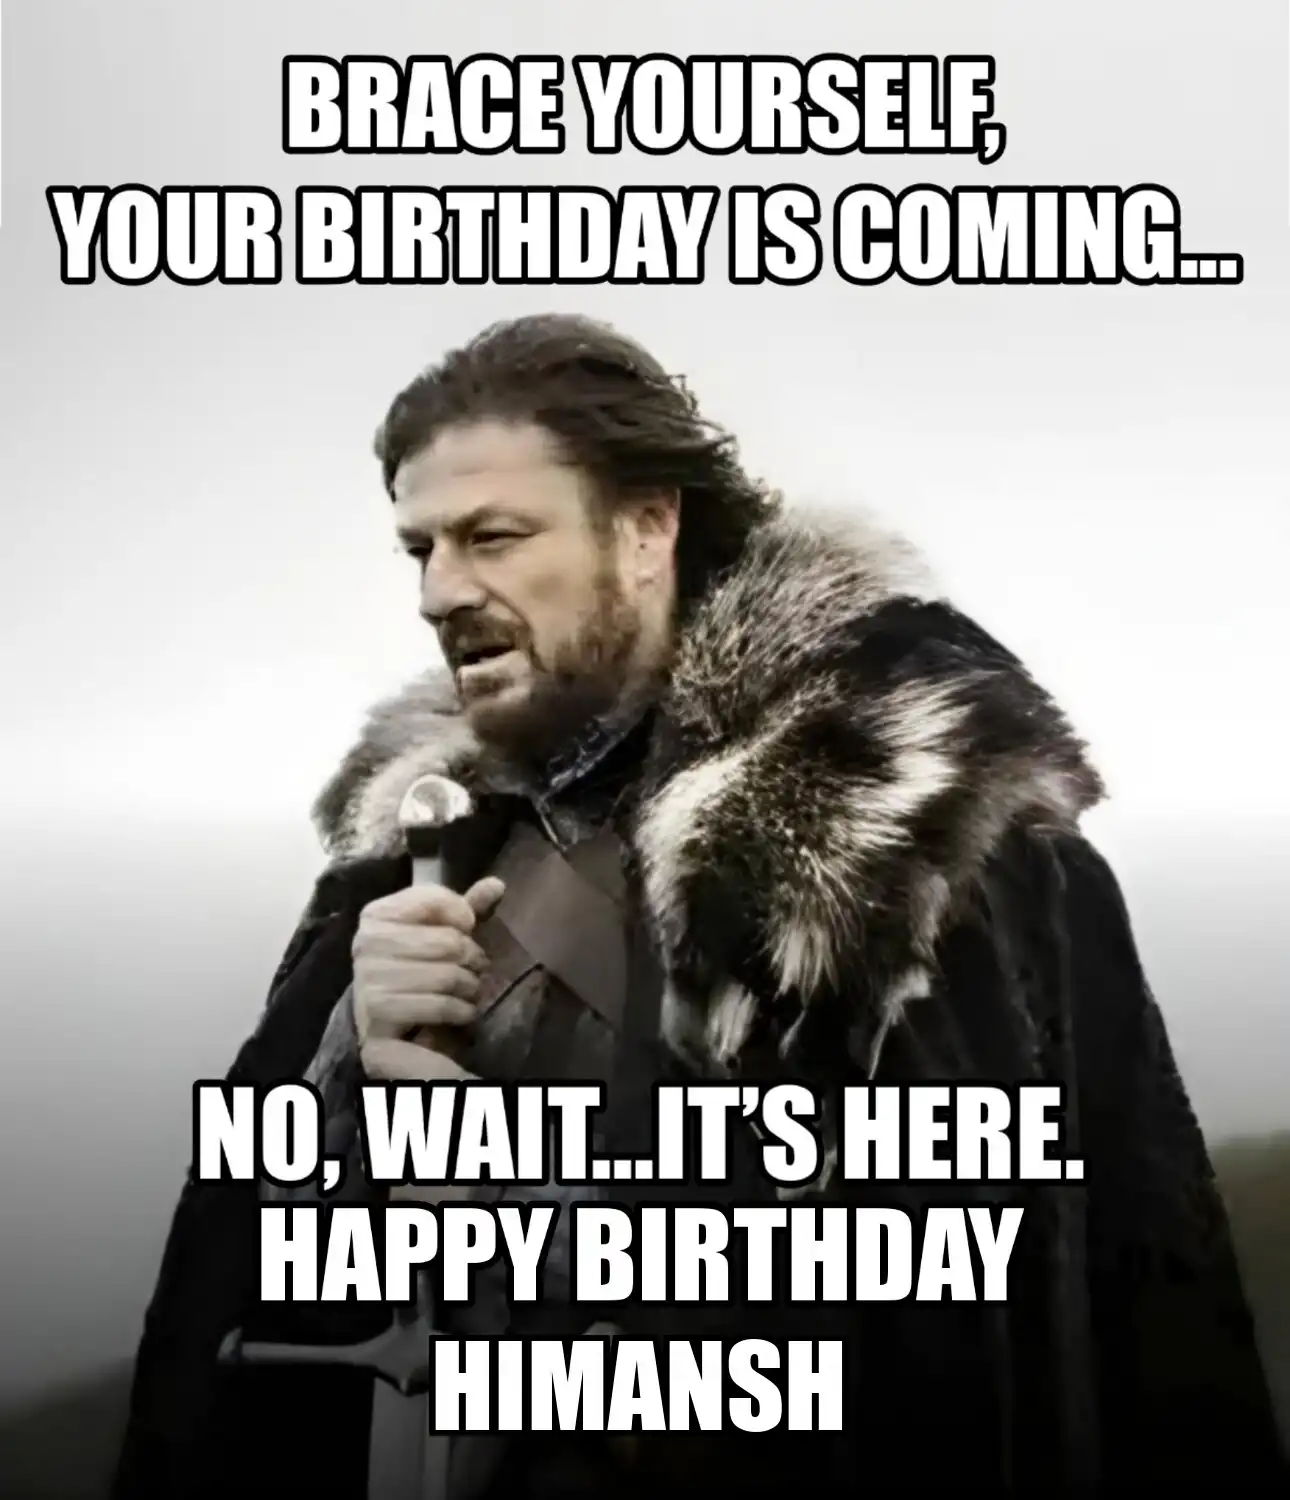 Happy Birthday Himansh Brace Yourself Your Birthday Is Coming Meme